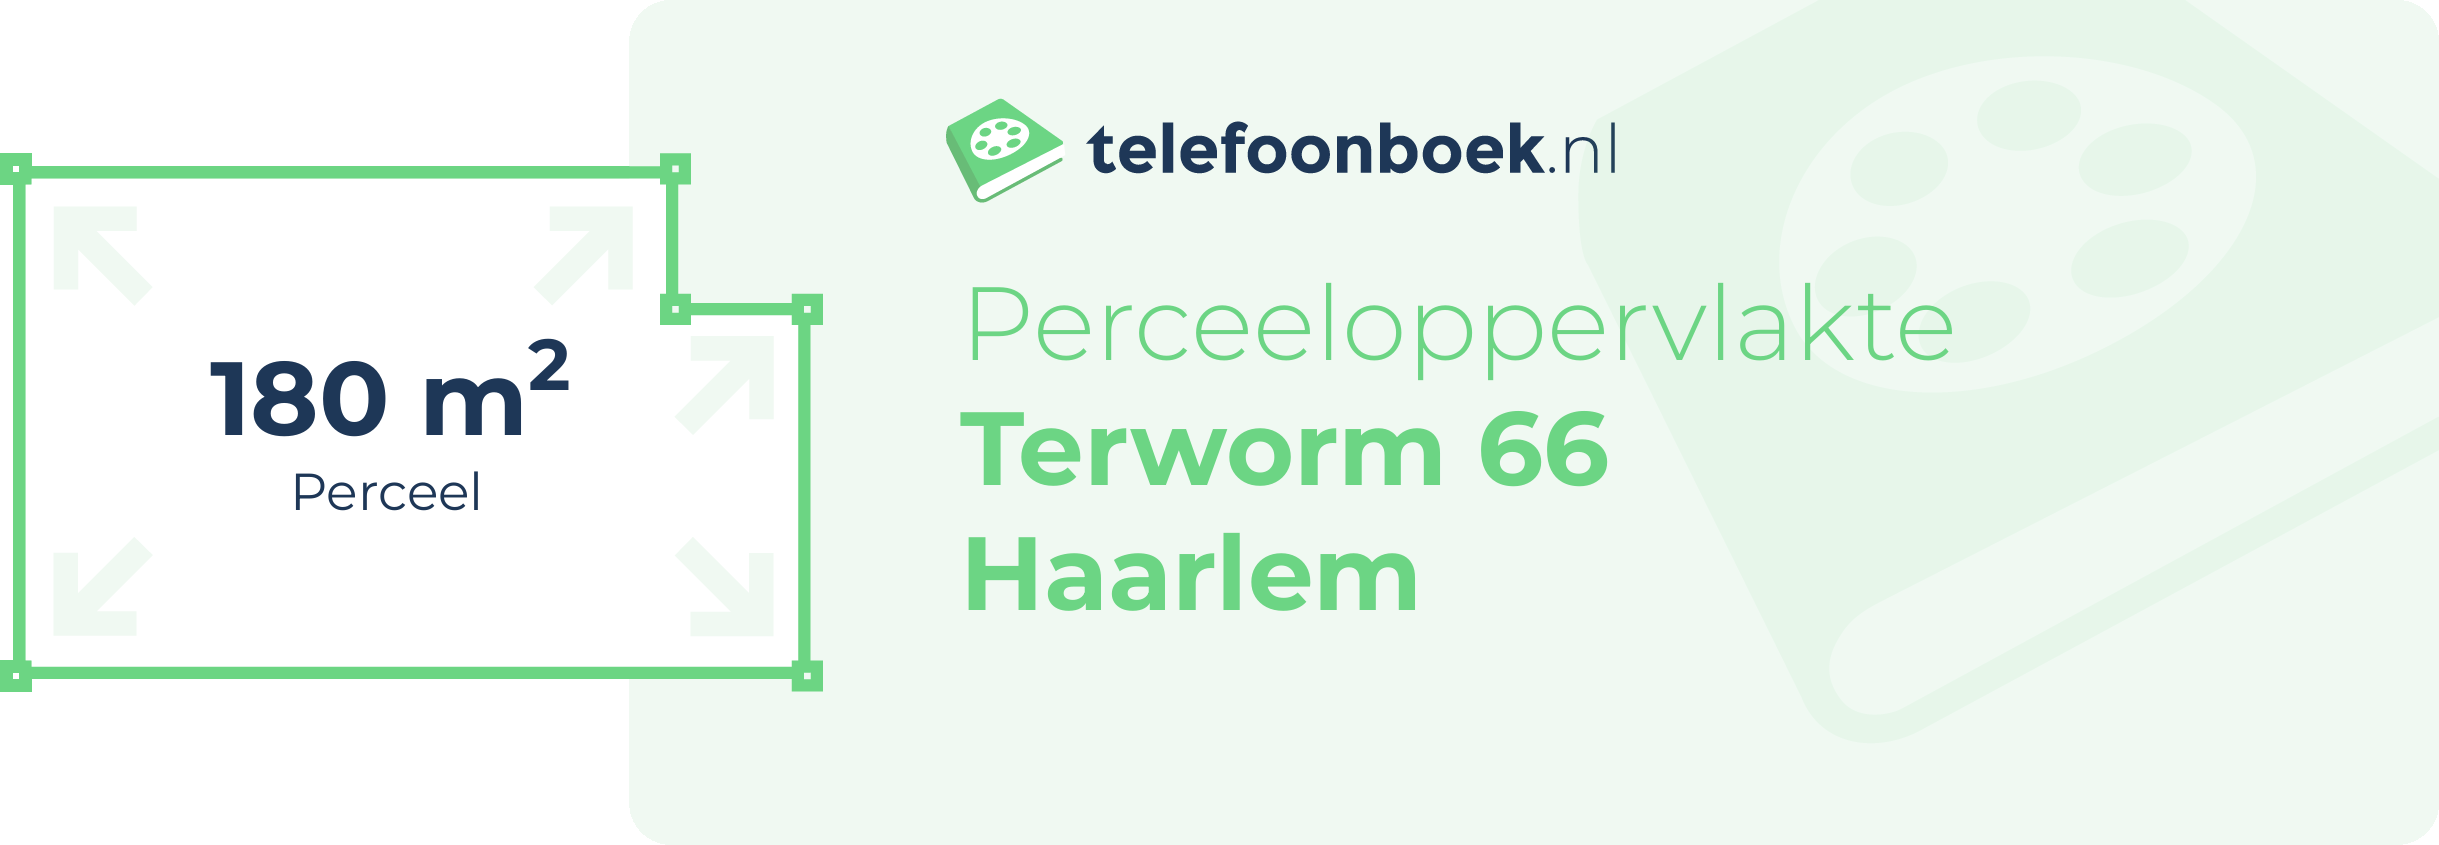 Perceeloppervlakte Terworm 66 Haarlem